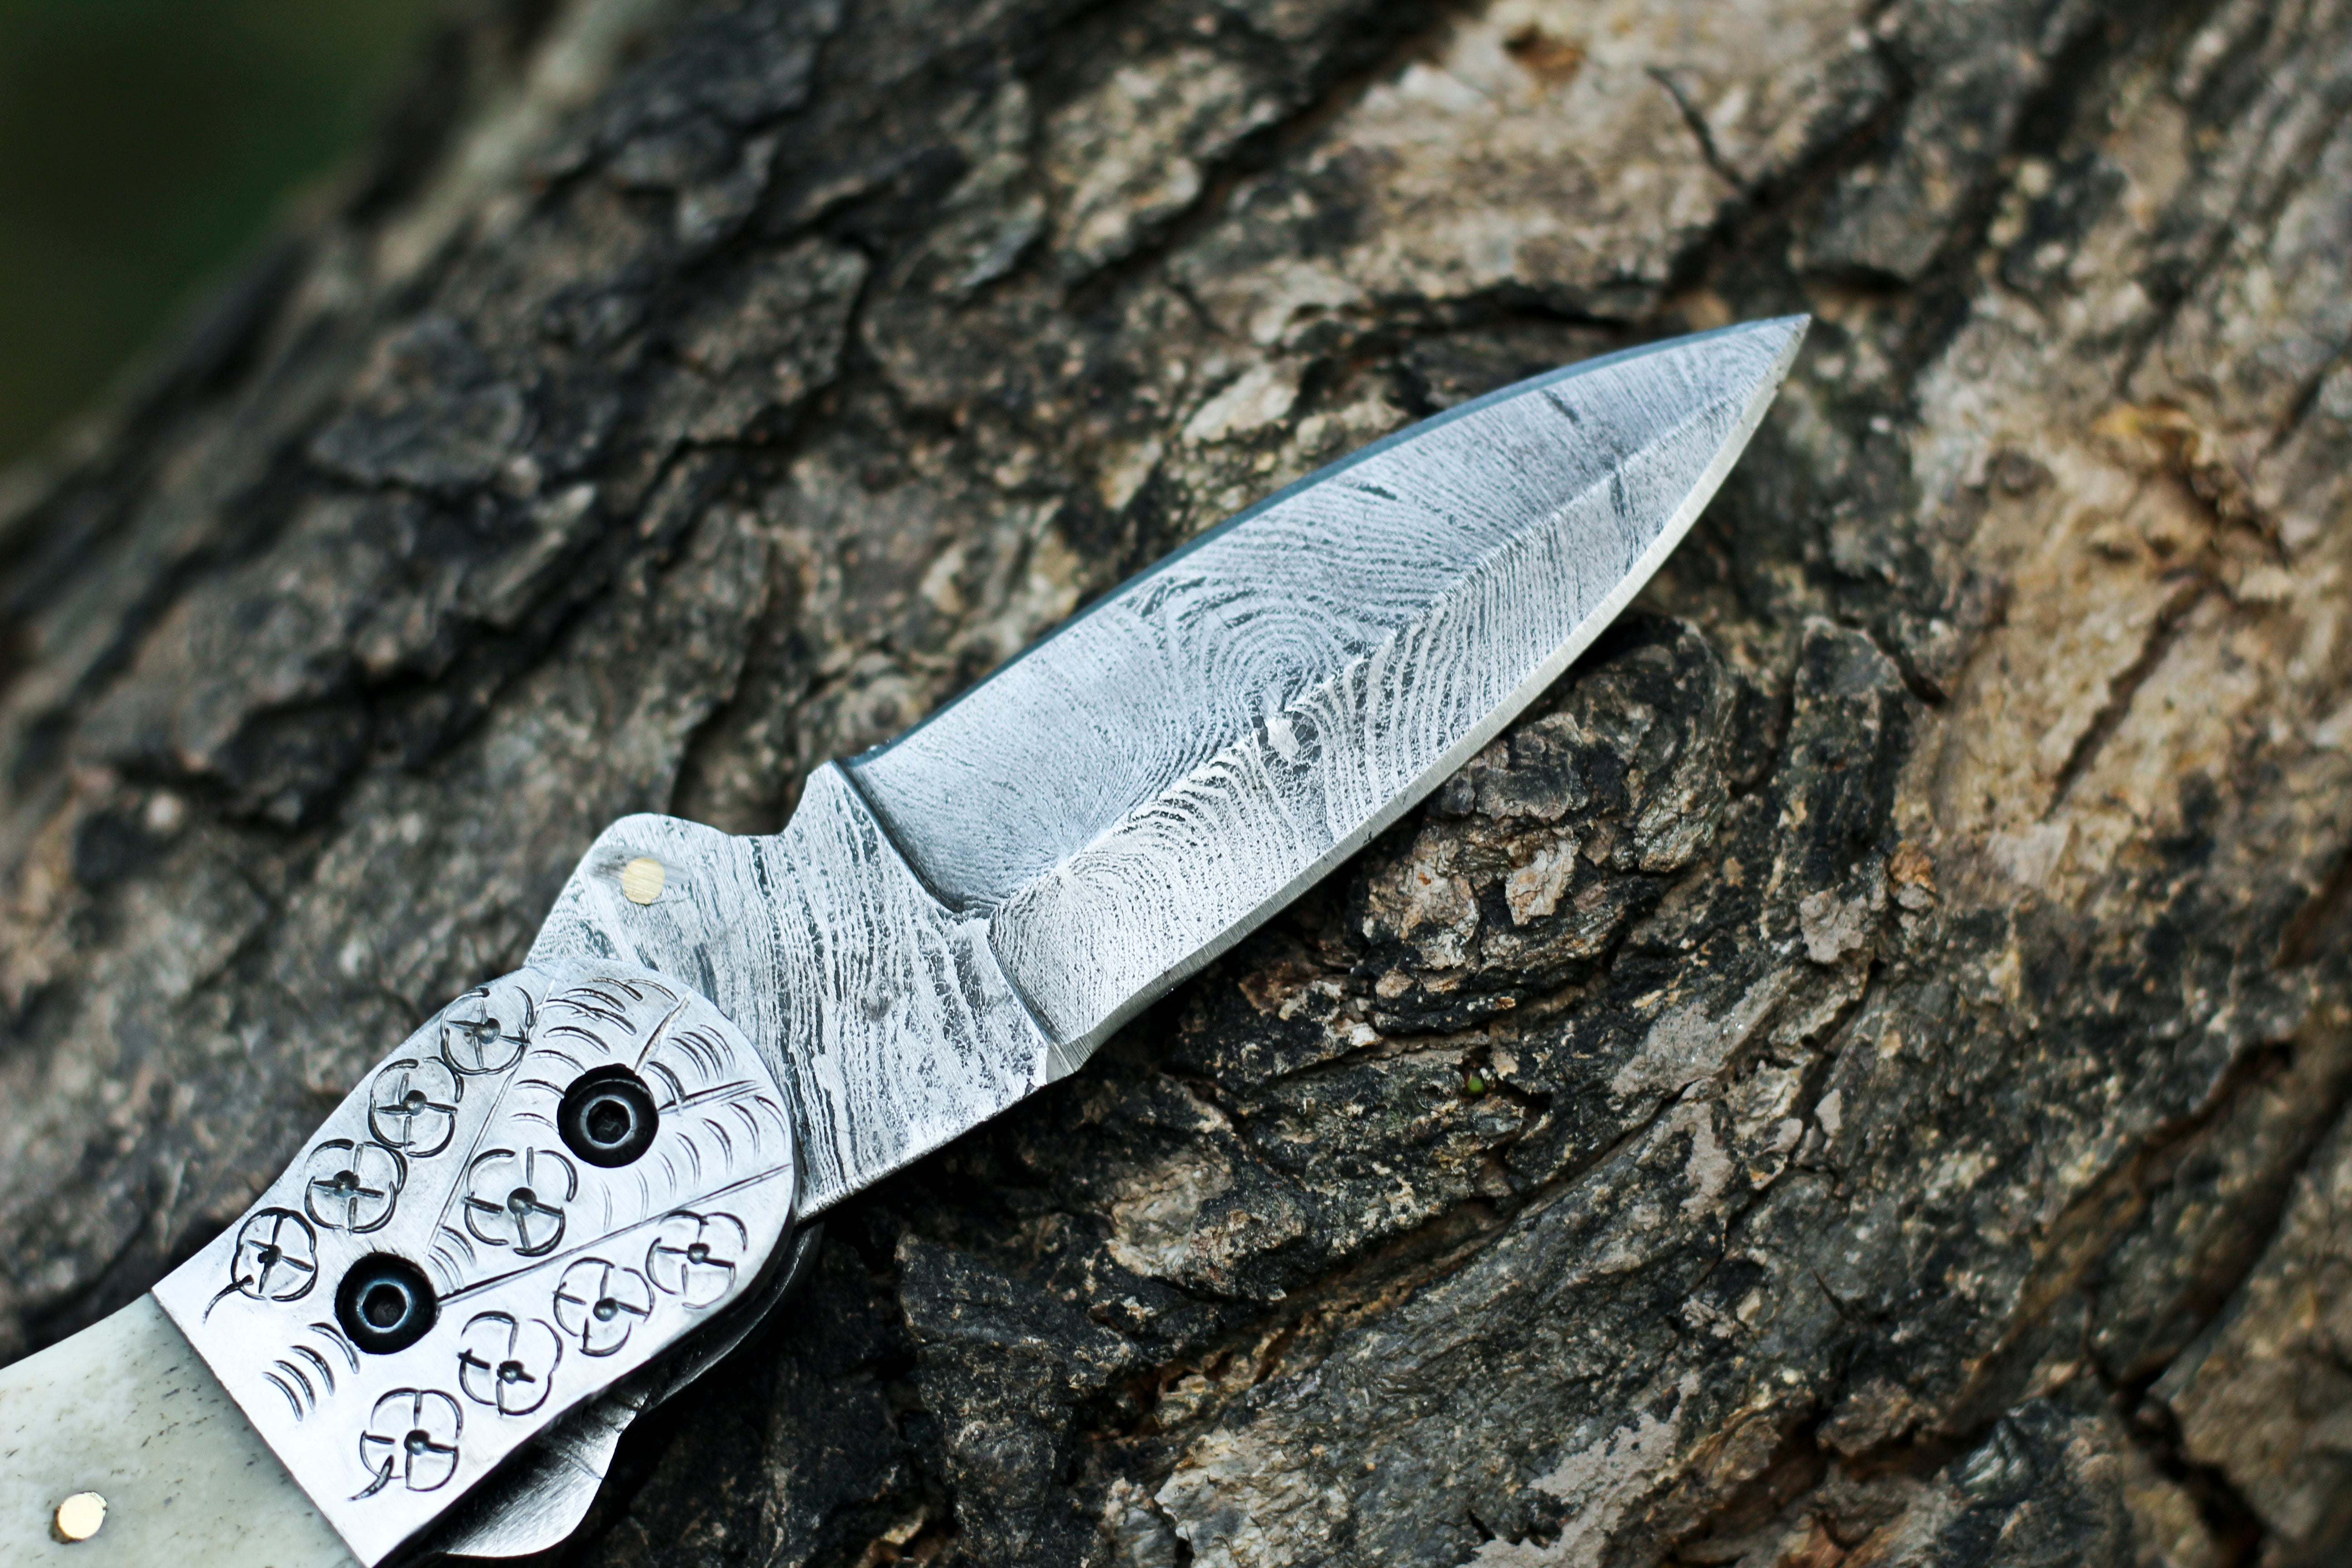 <h3>Handmade Damascus Steel Hunting Pocket Knife Camping Folding Blade With Camel Bone Handle</h3>